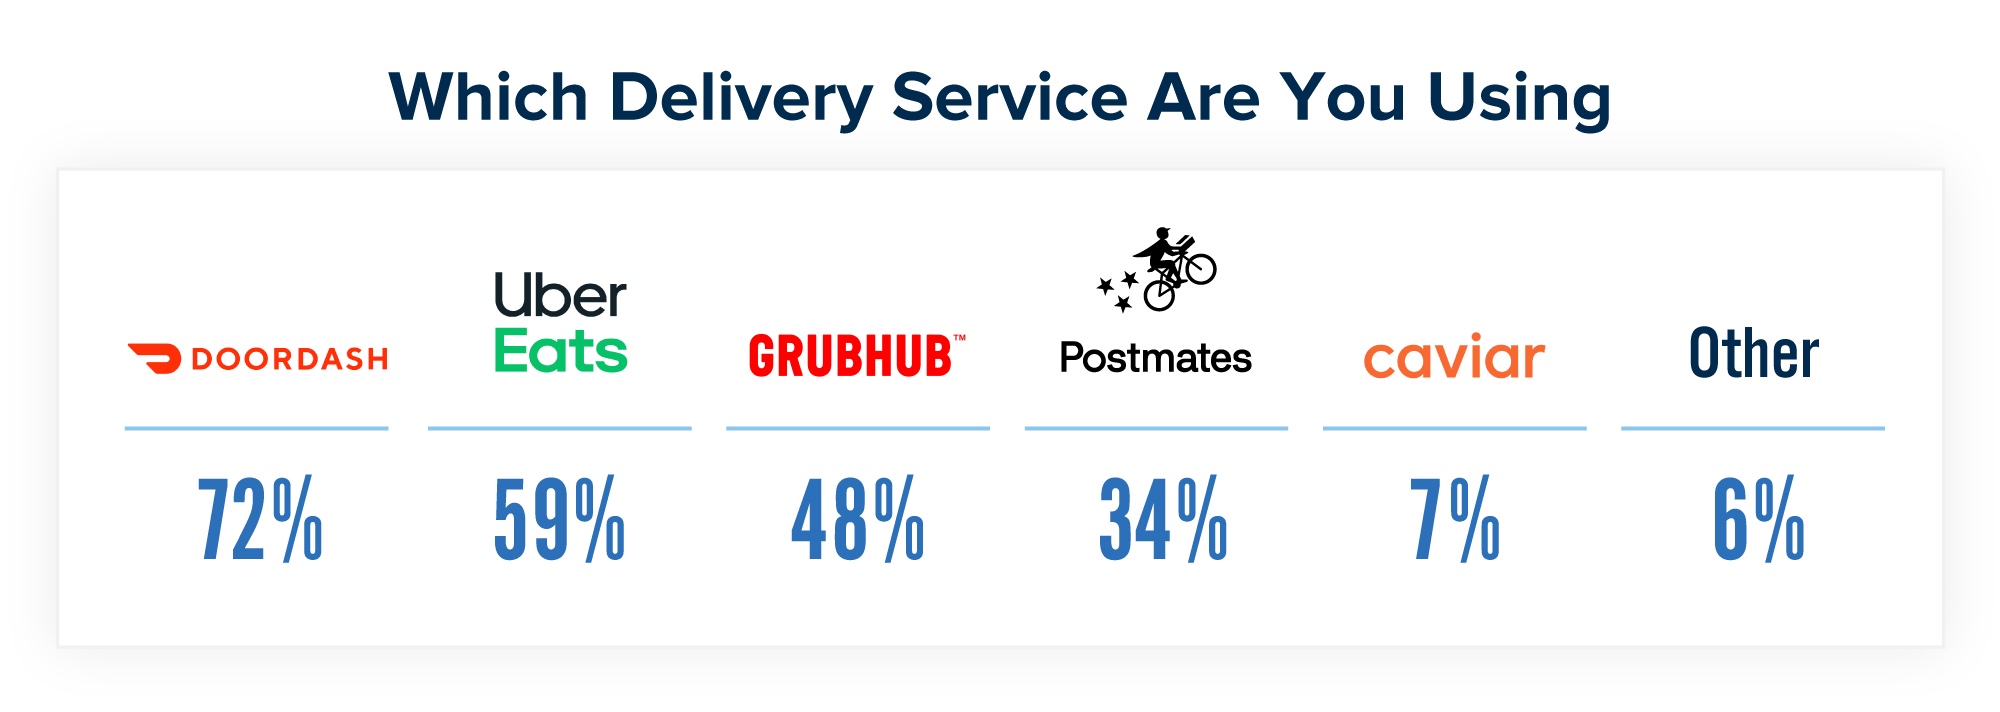 Delivery Company Breakdown